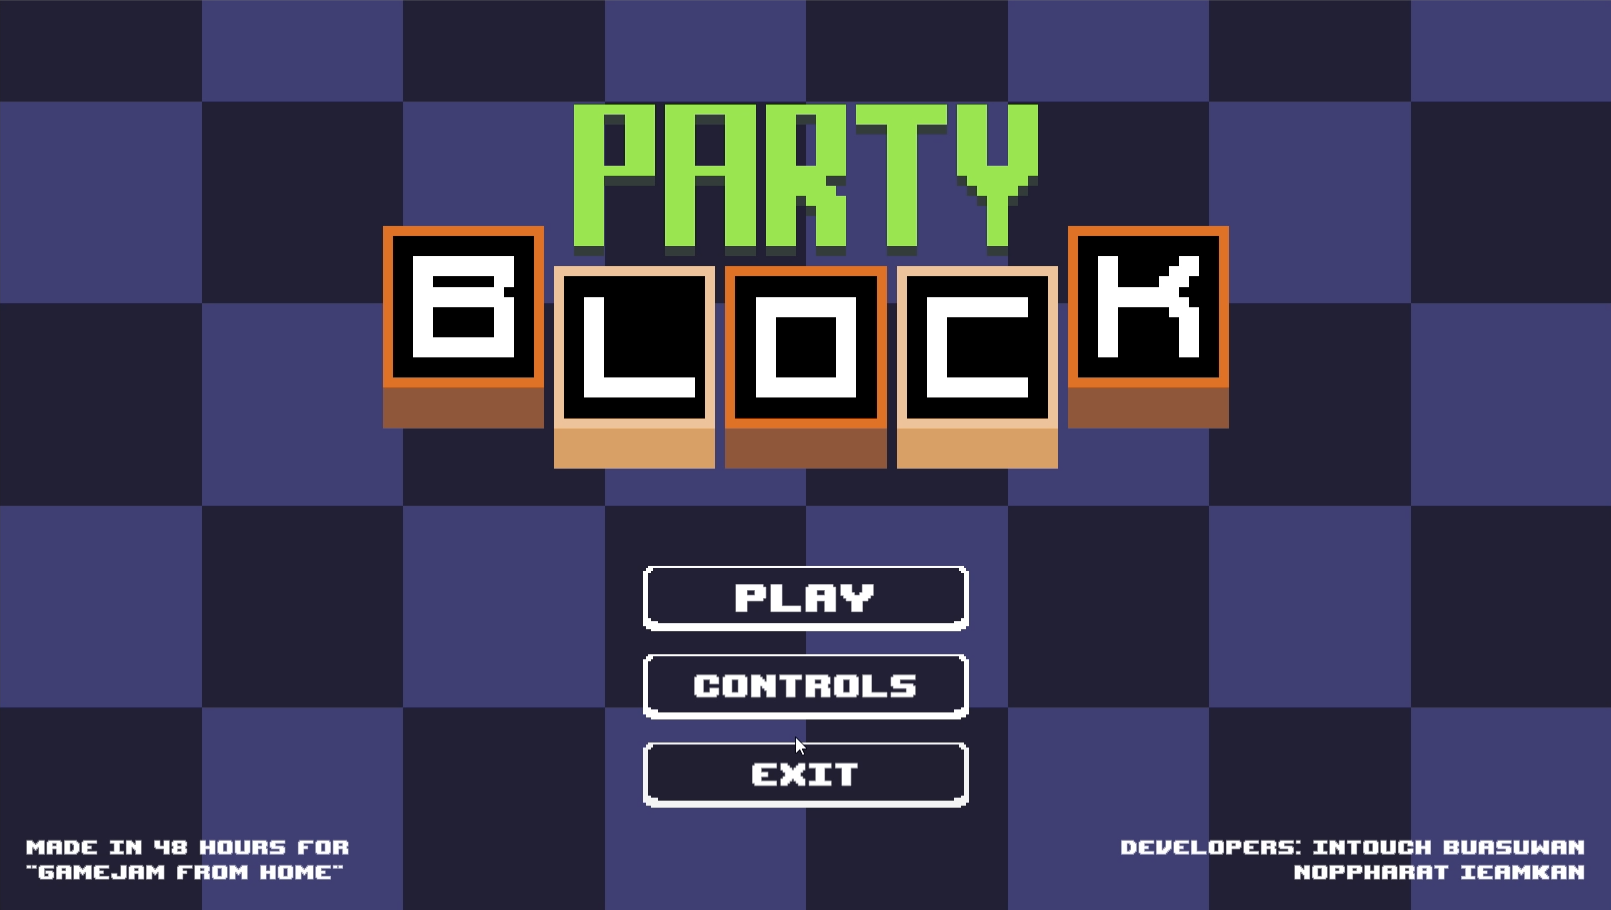 Party Block